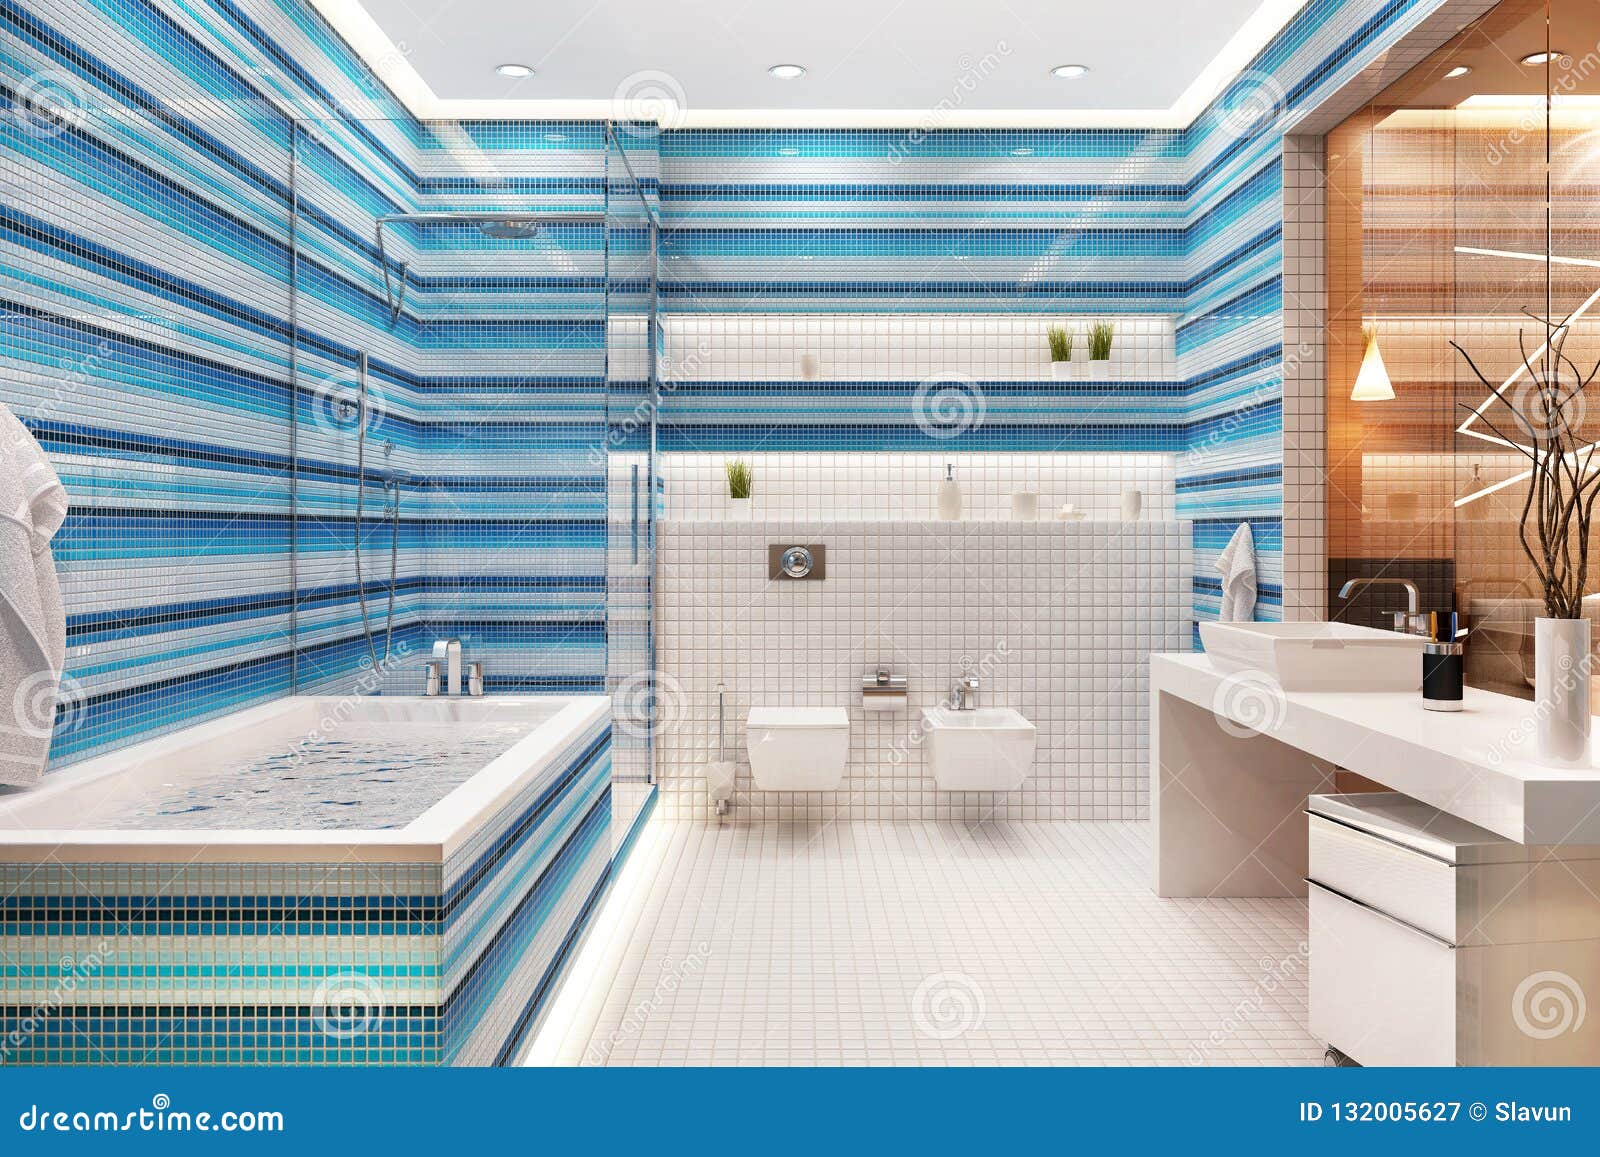 Modern Mosaic Beautiful Bathroom Design Stock Image Image Of Interior